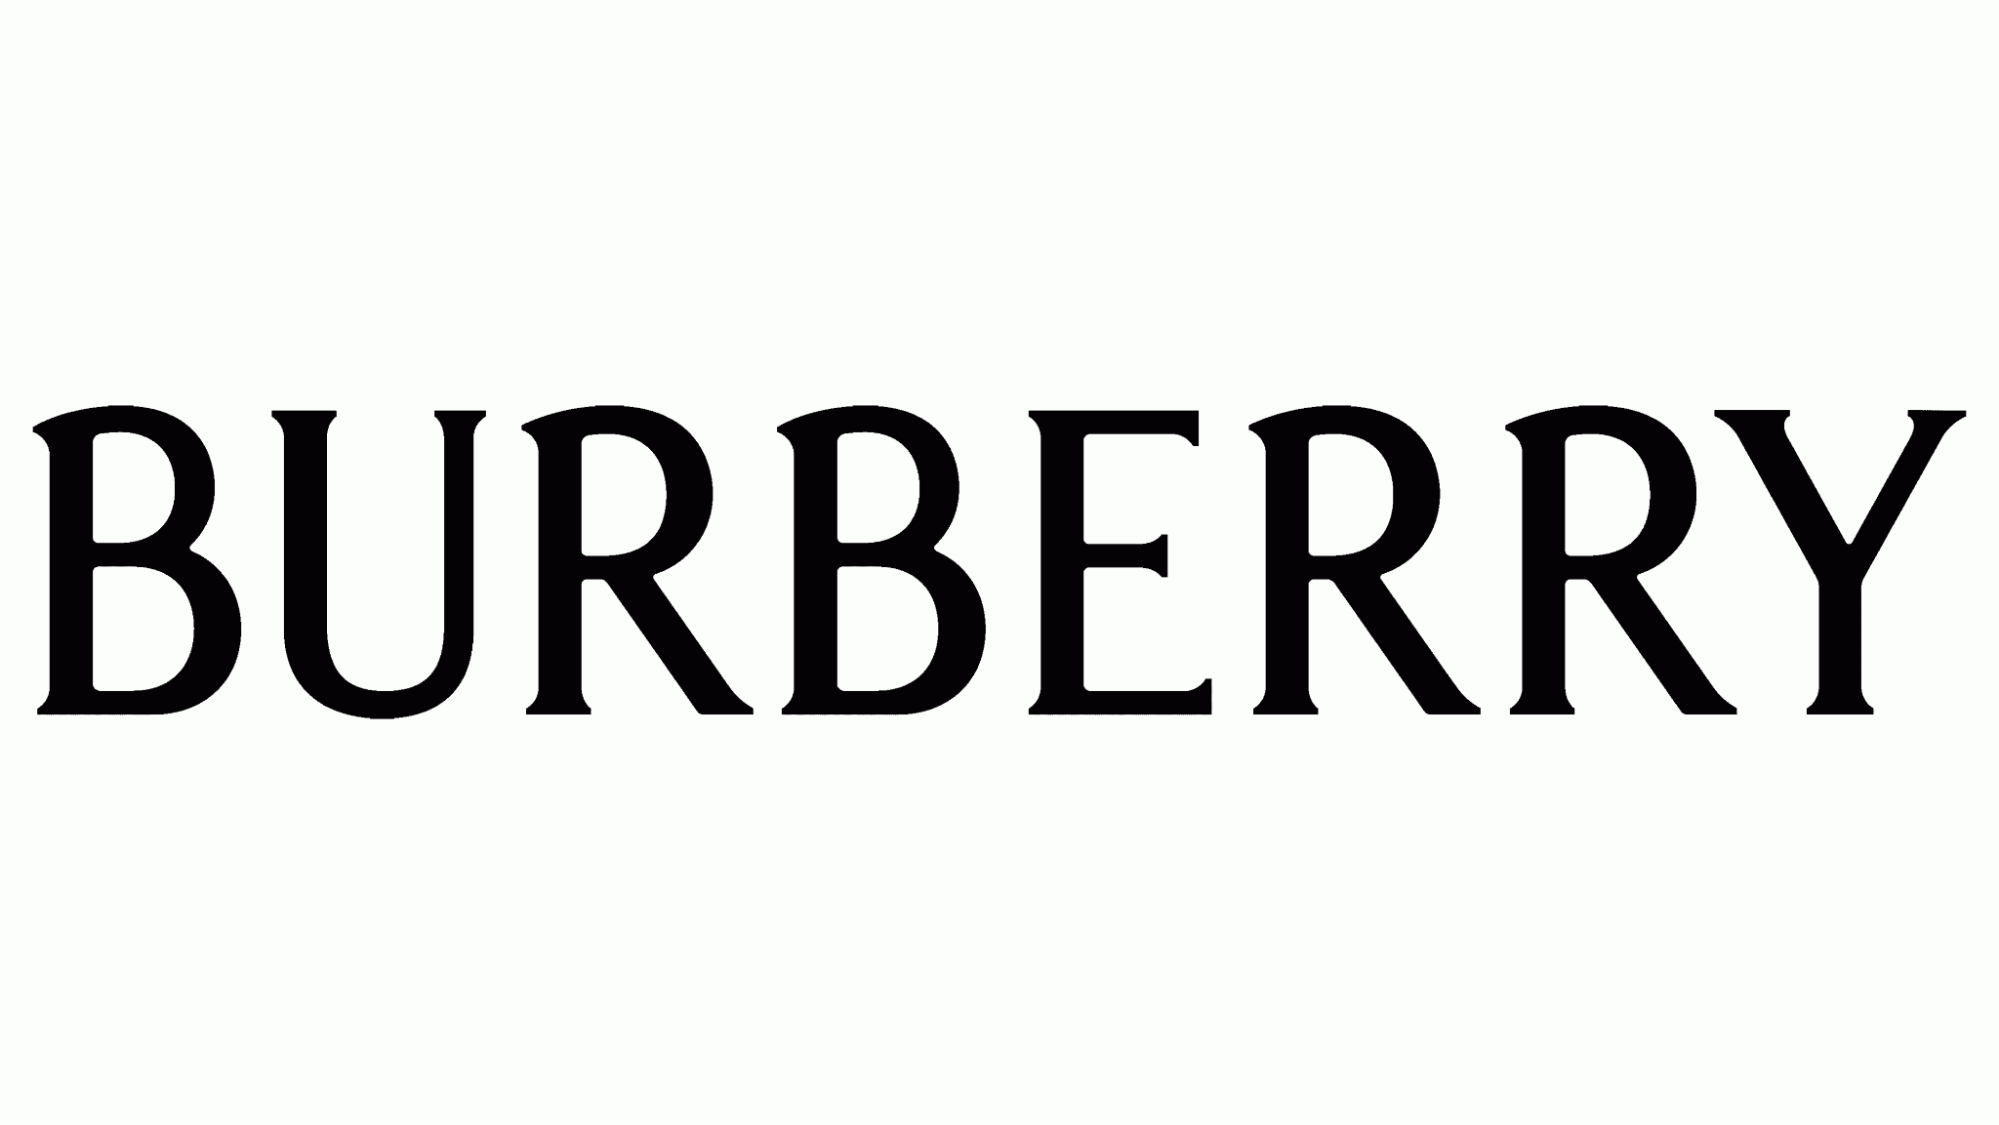 Burberryのロゴマークの変遷と時代 Swings